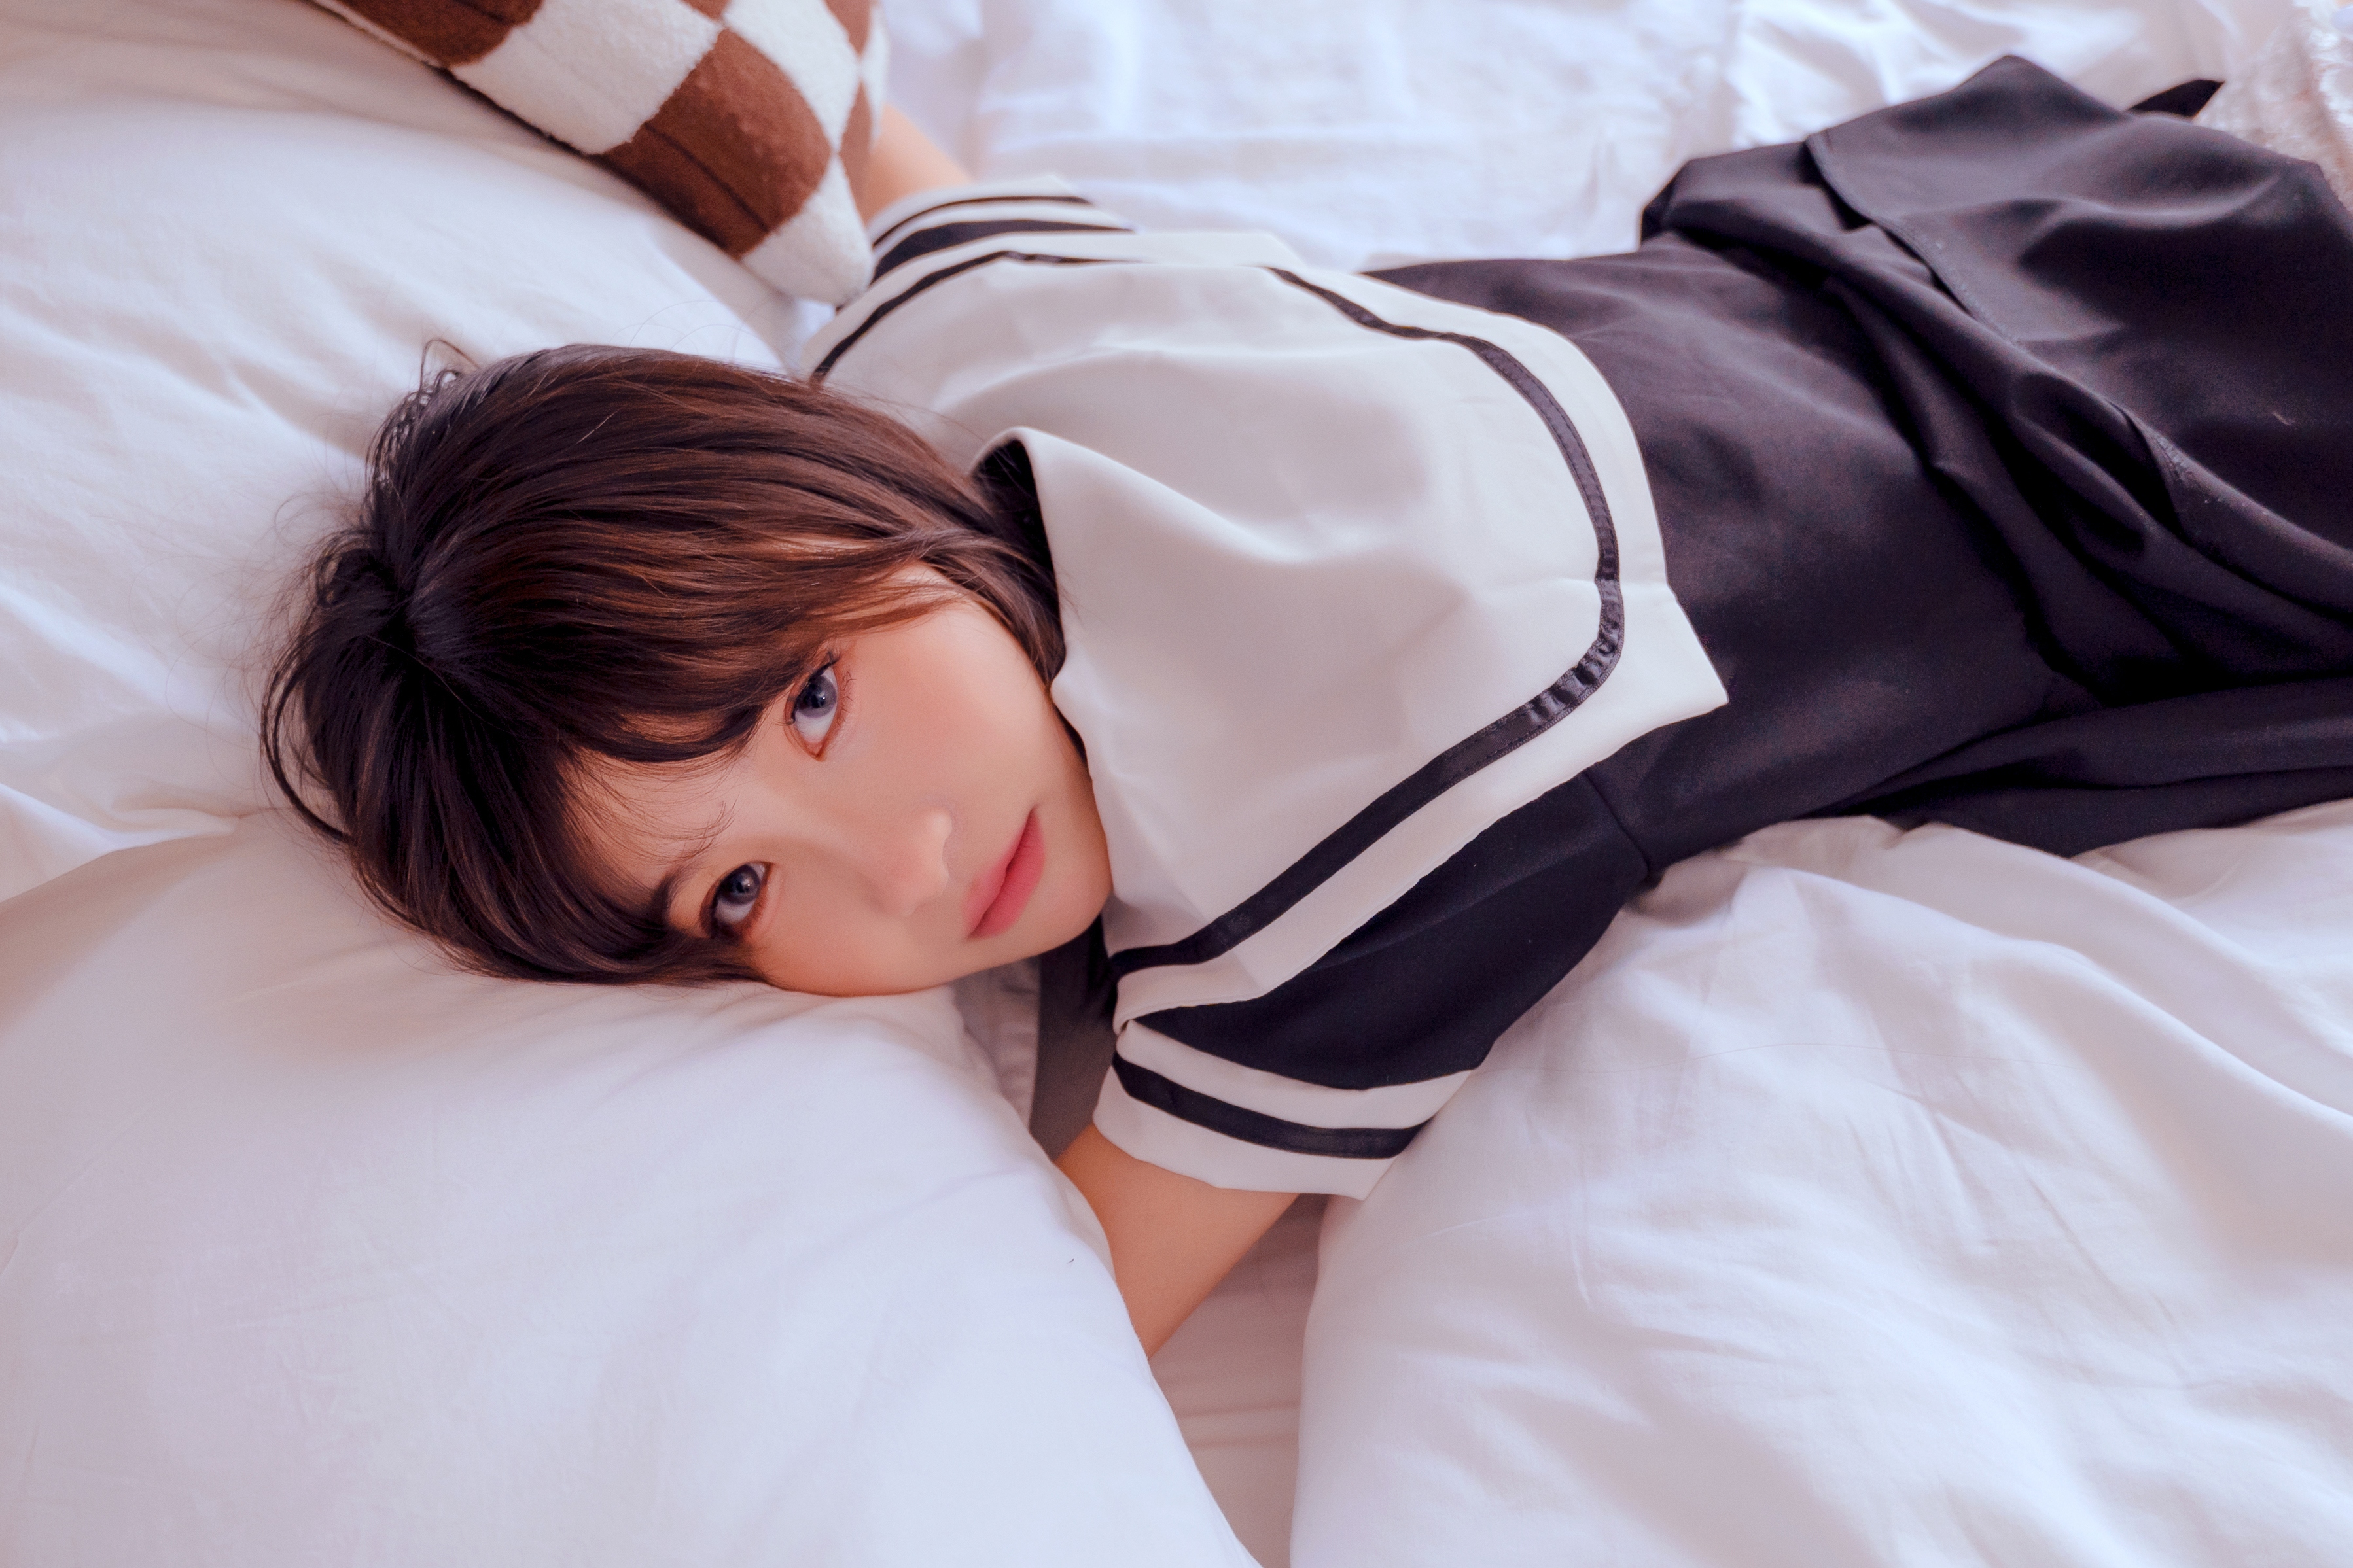 Bed School Uniform Asian Women Lying Down Looking At Viewer 3596x2397